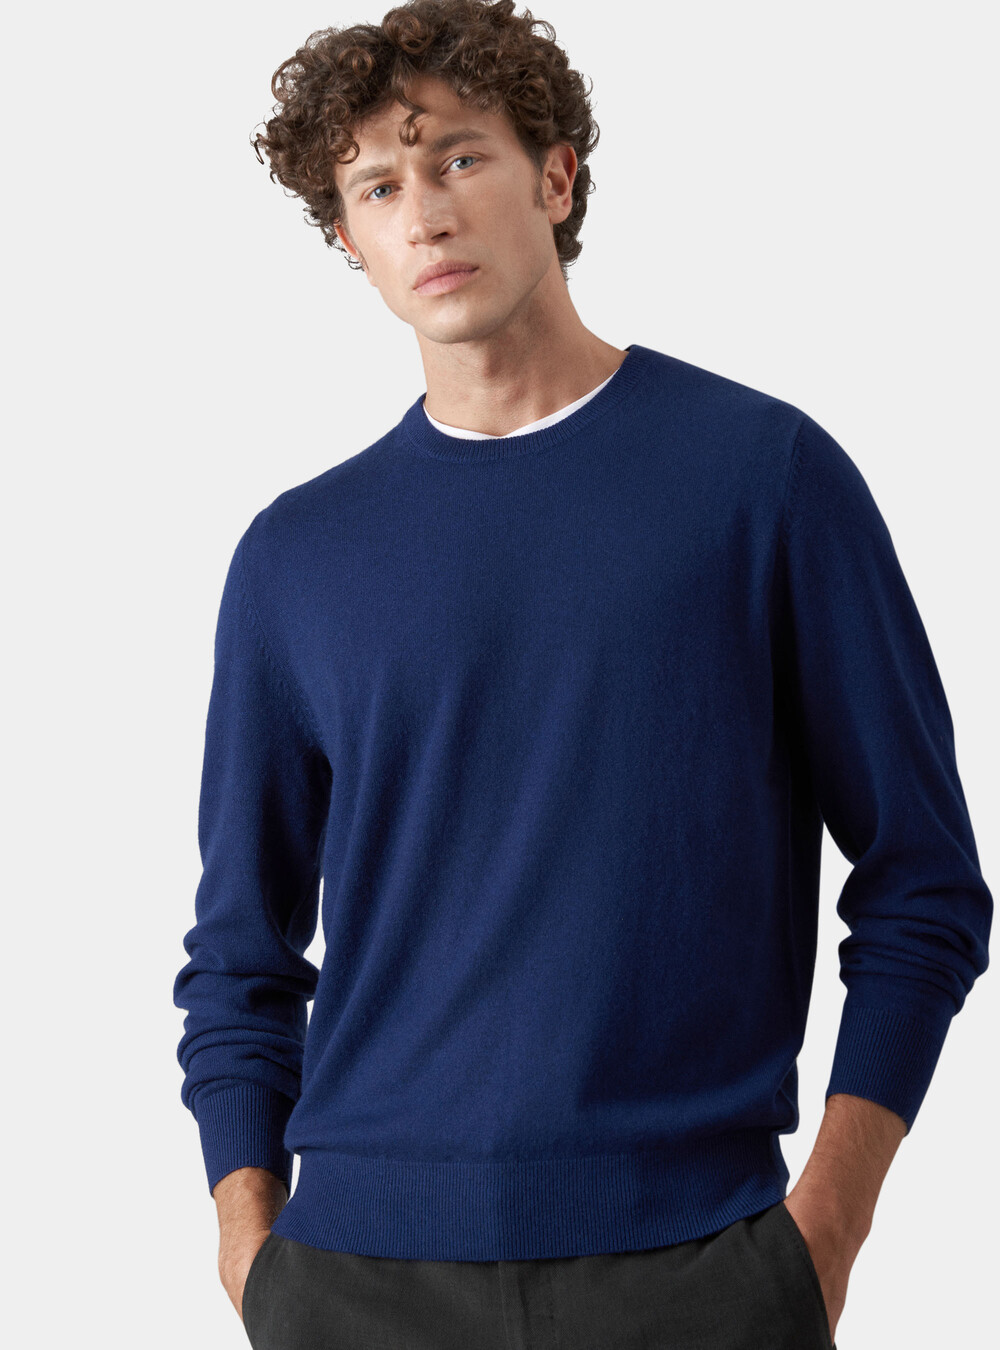 Crew-neck sweater 100% cashmere | GutteridgeUS | Men's Sweaters